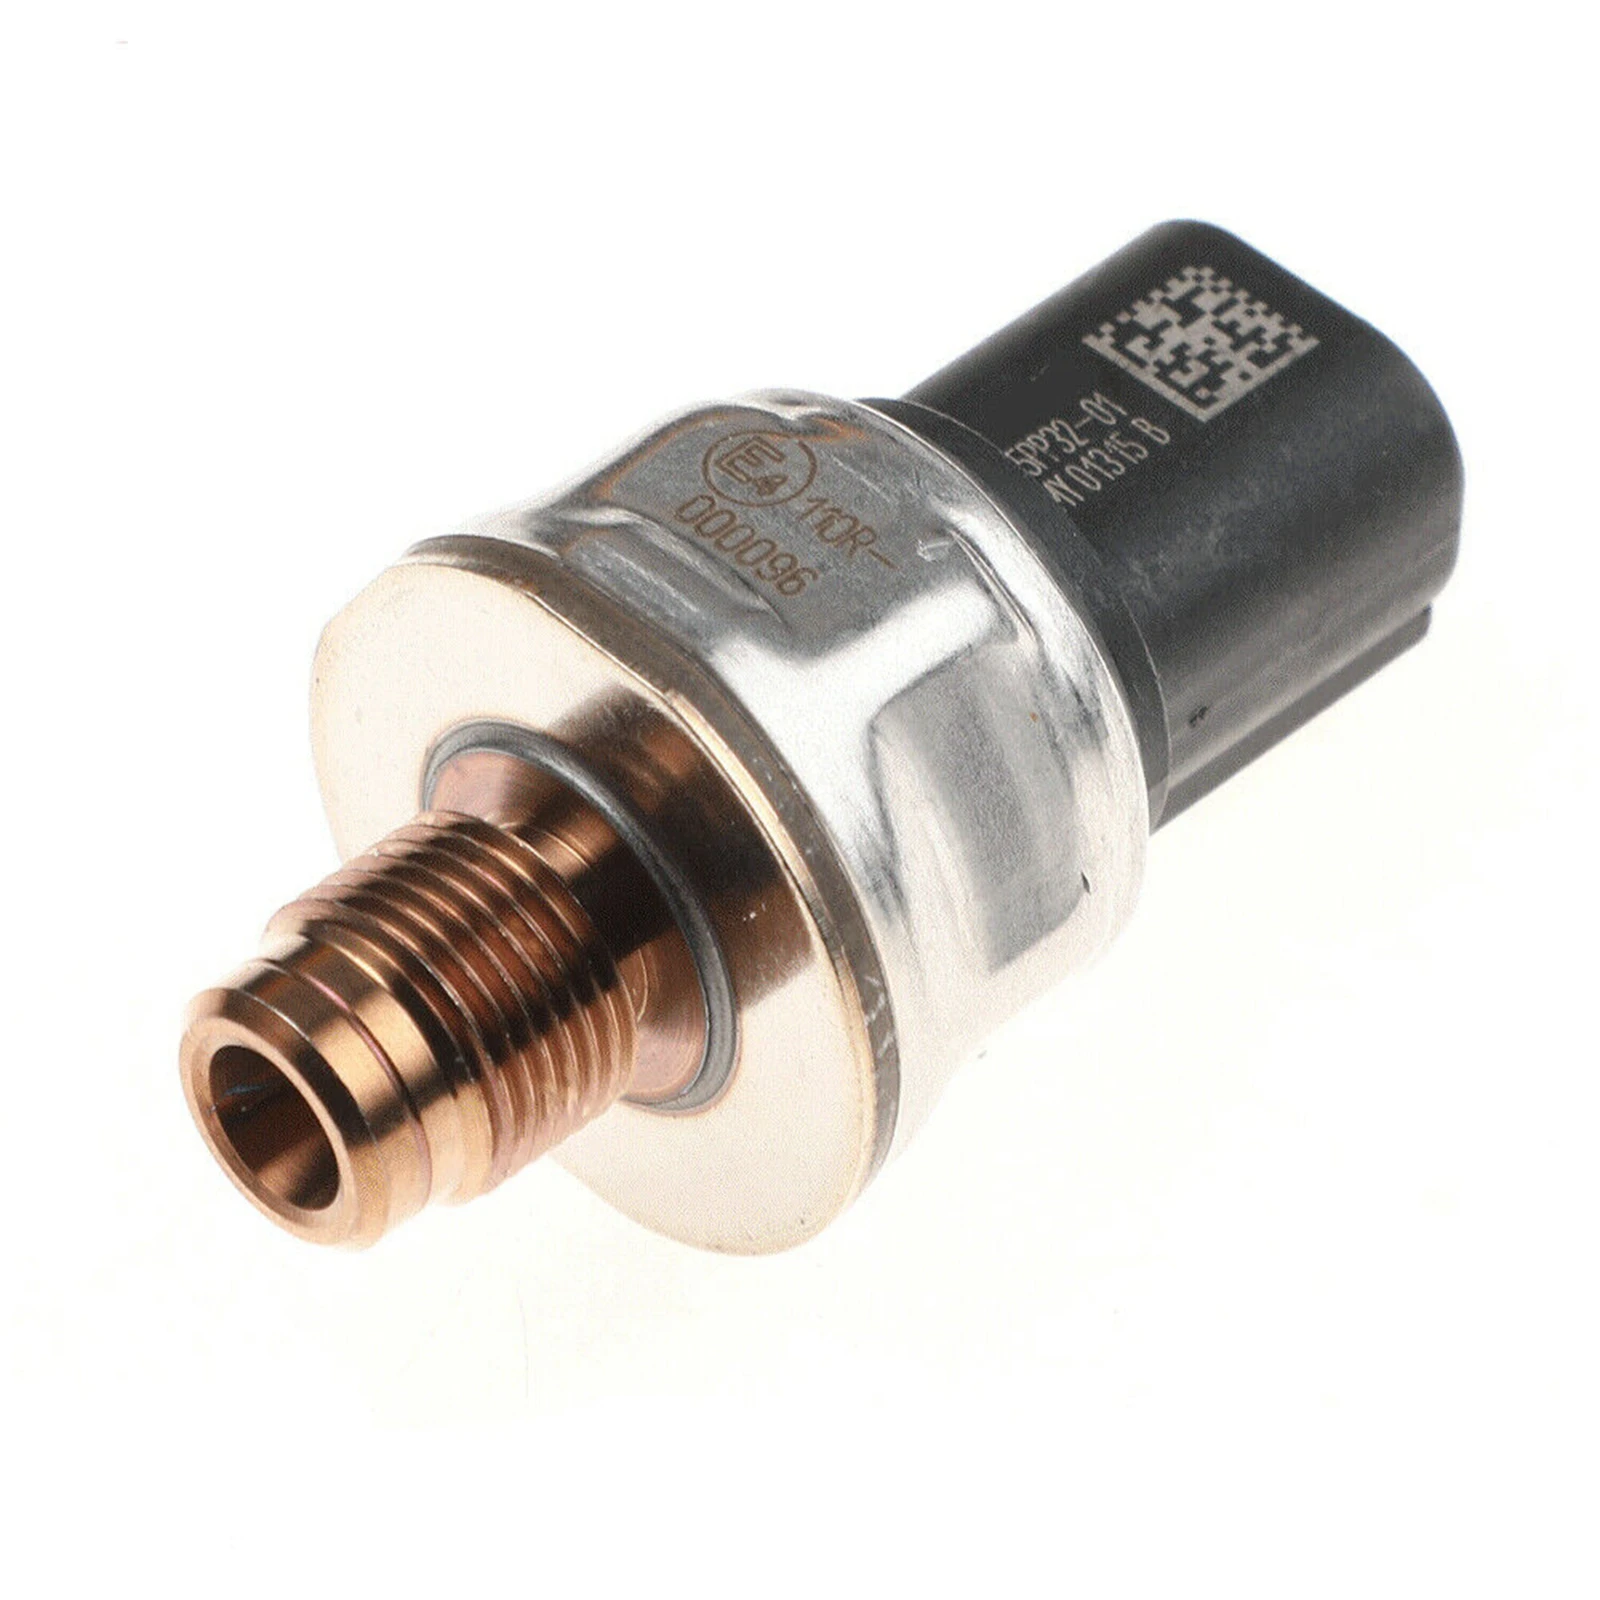 Fuel Rail Pressure Sensor 55PP32-01 Replacement Parts Automotive Fuel System Accessories Fit for Cng Pressure Regulator